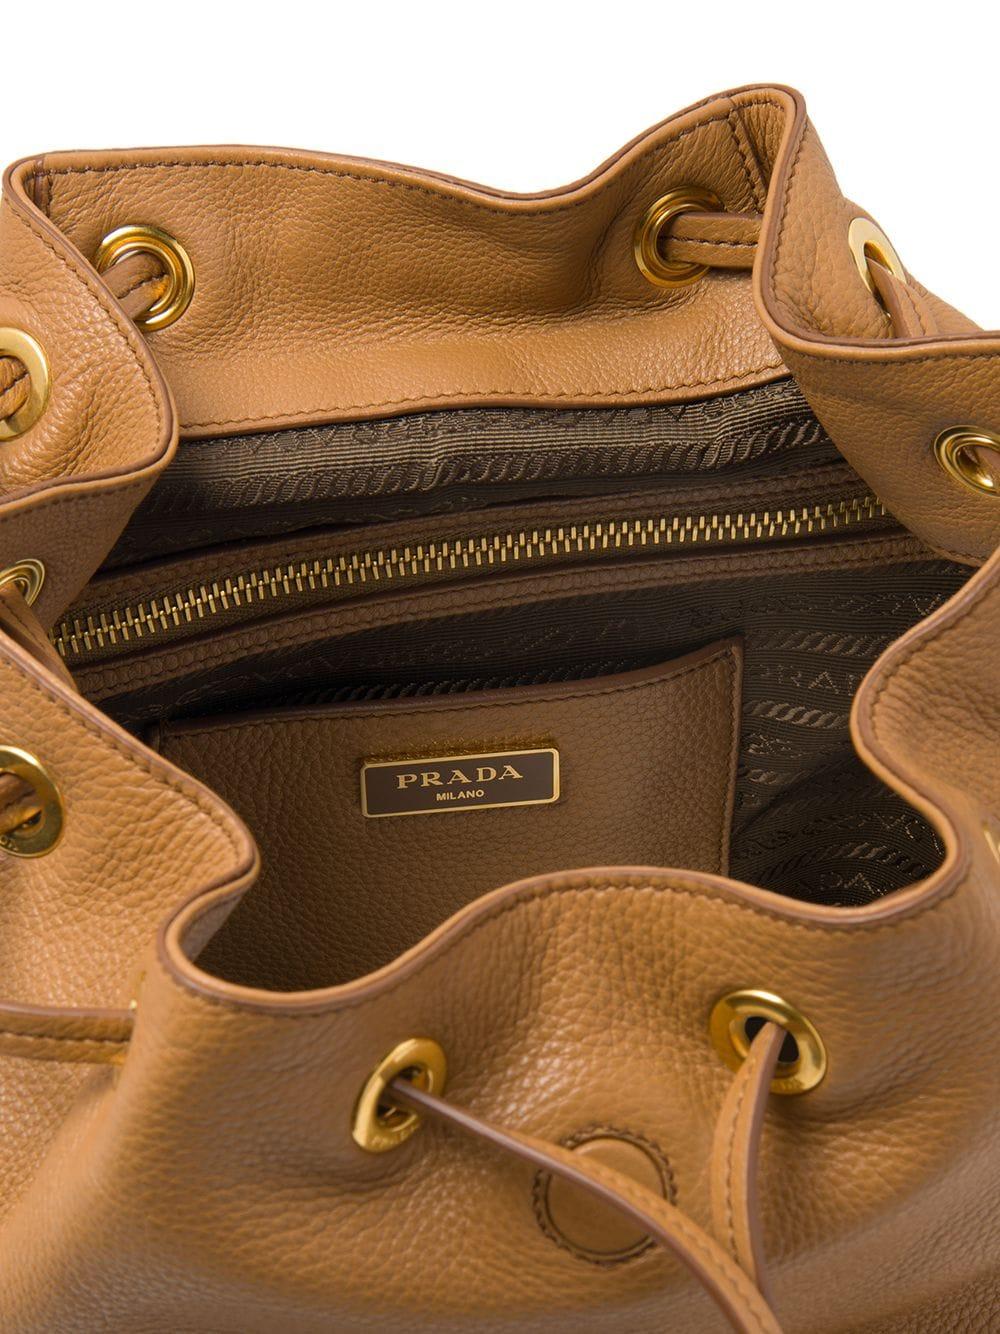 Prada Brown Pebble Leather Bag with Cargo Pockets